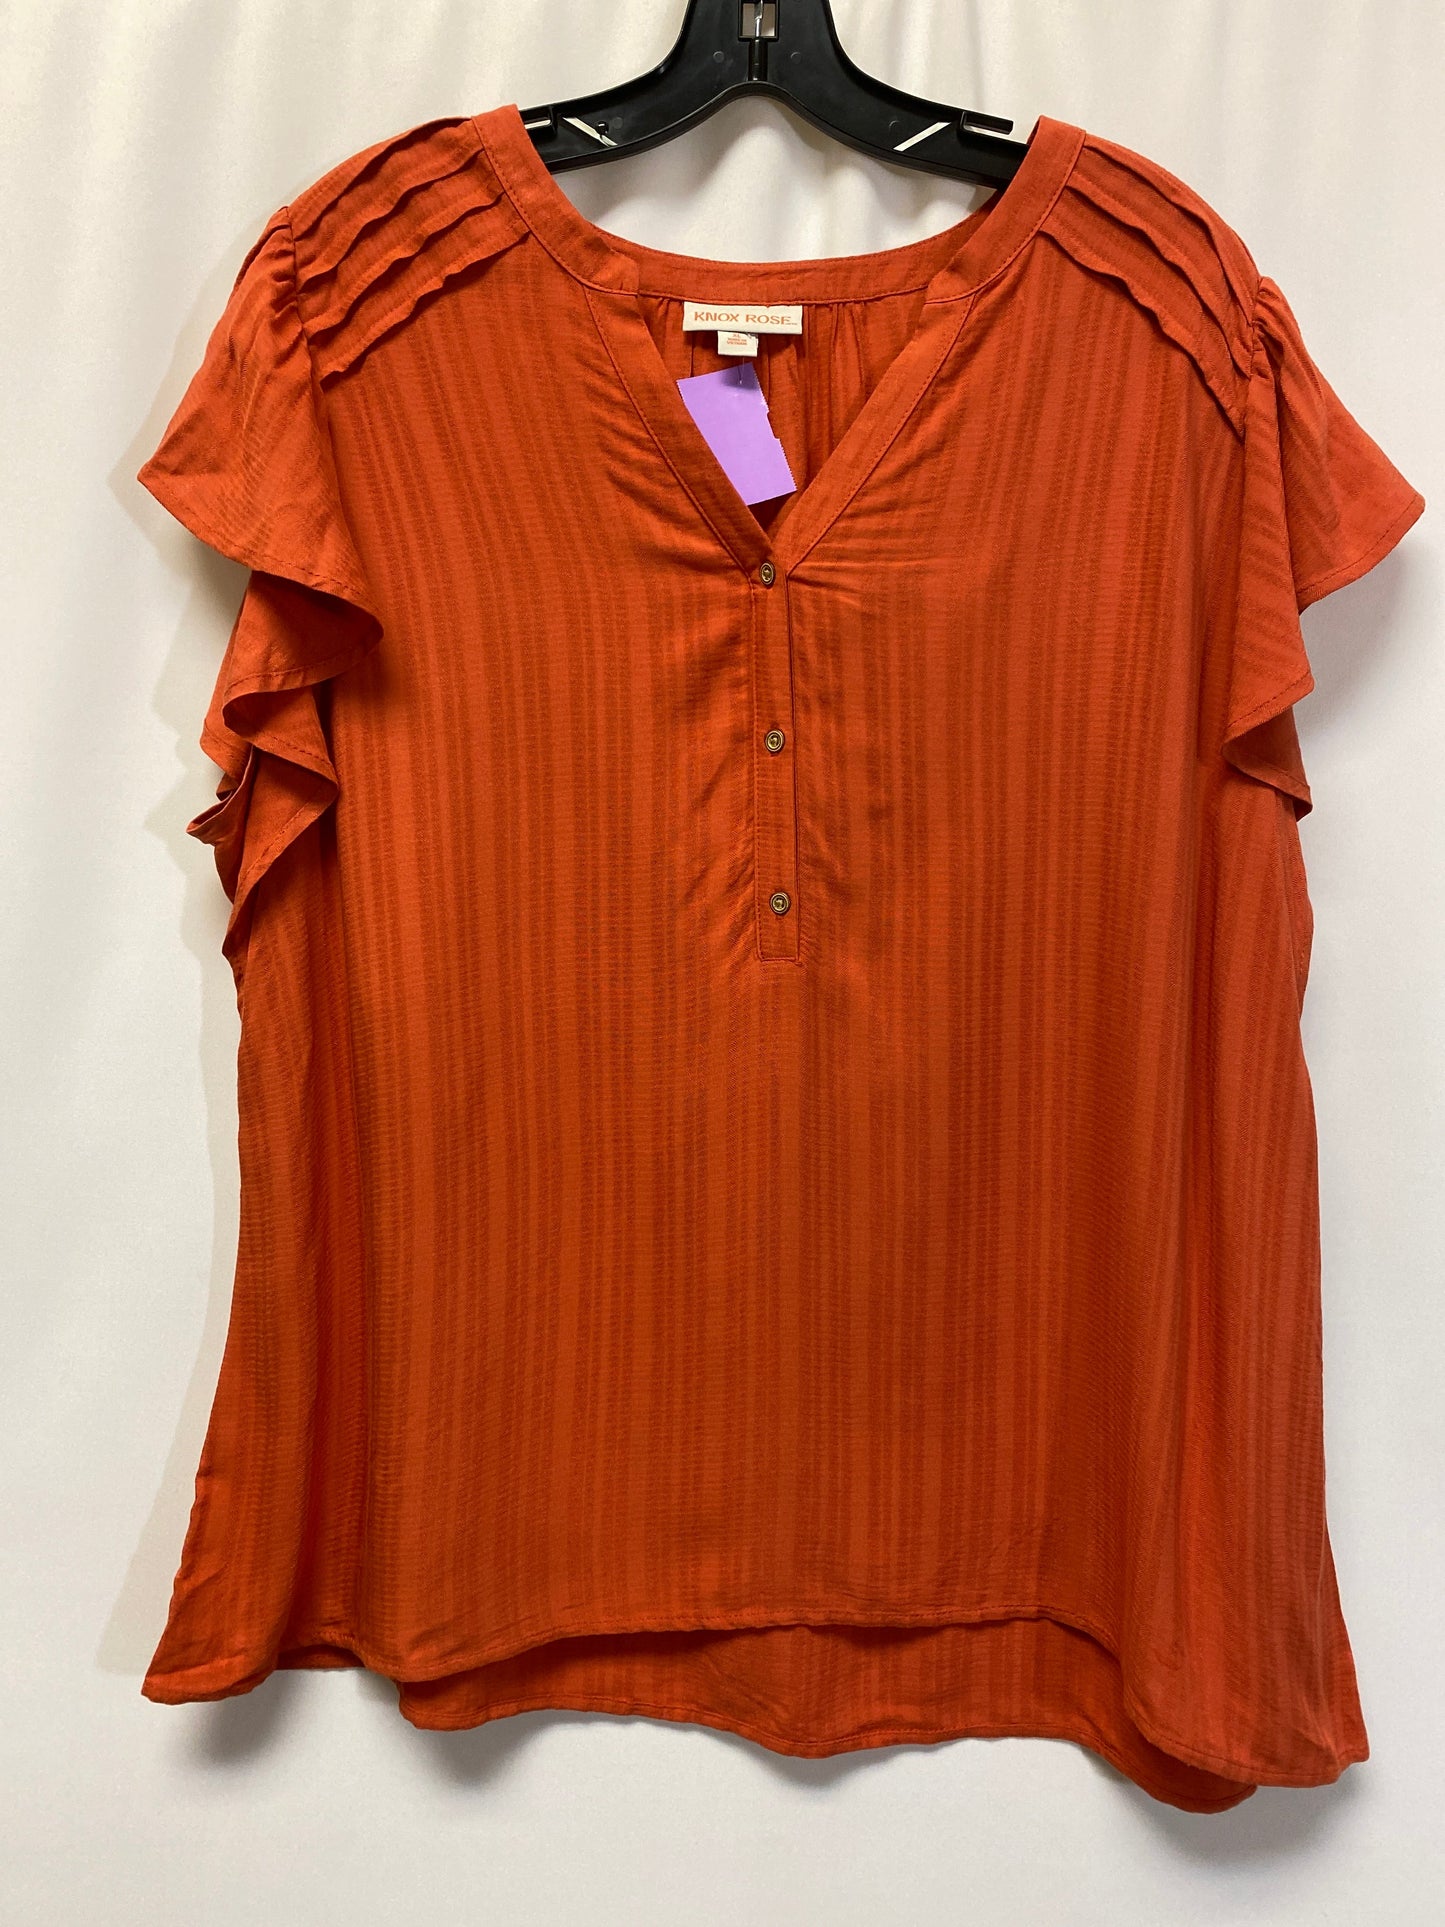 Orange Top Short Sleeve Knox Rose, Size Xl